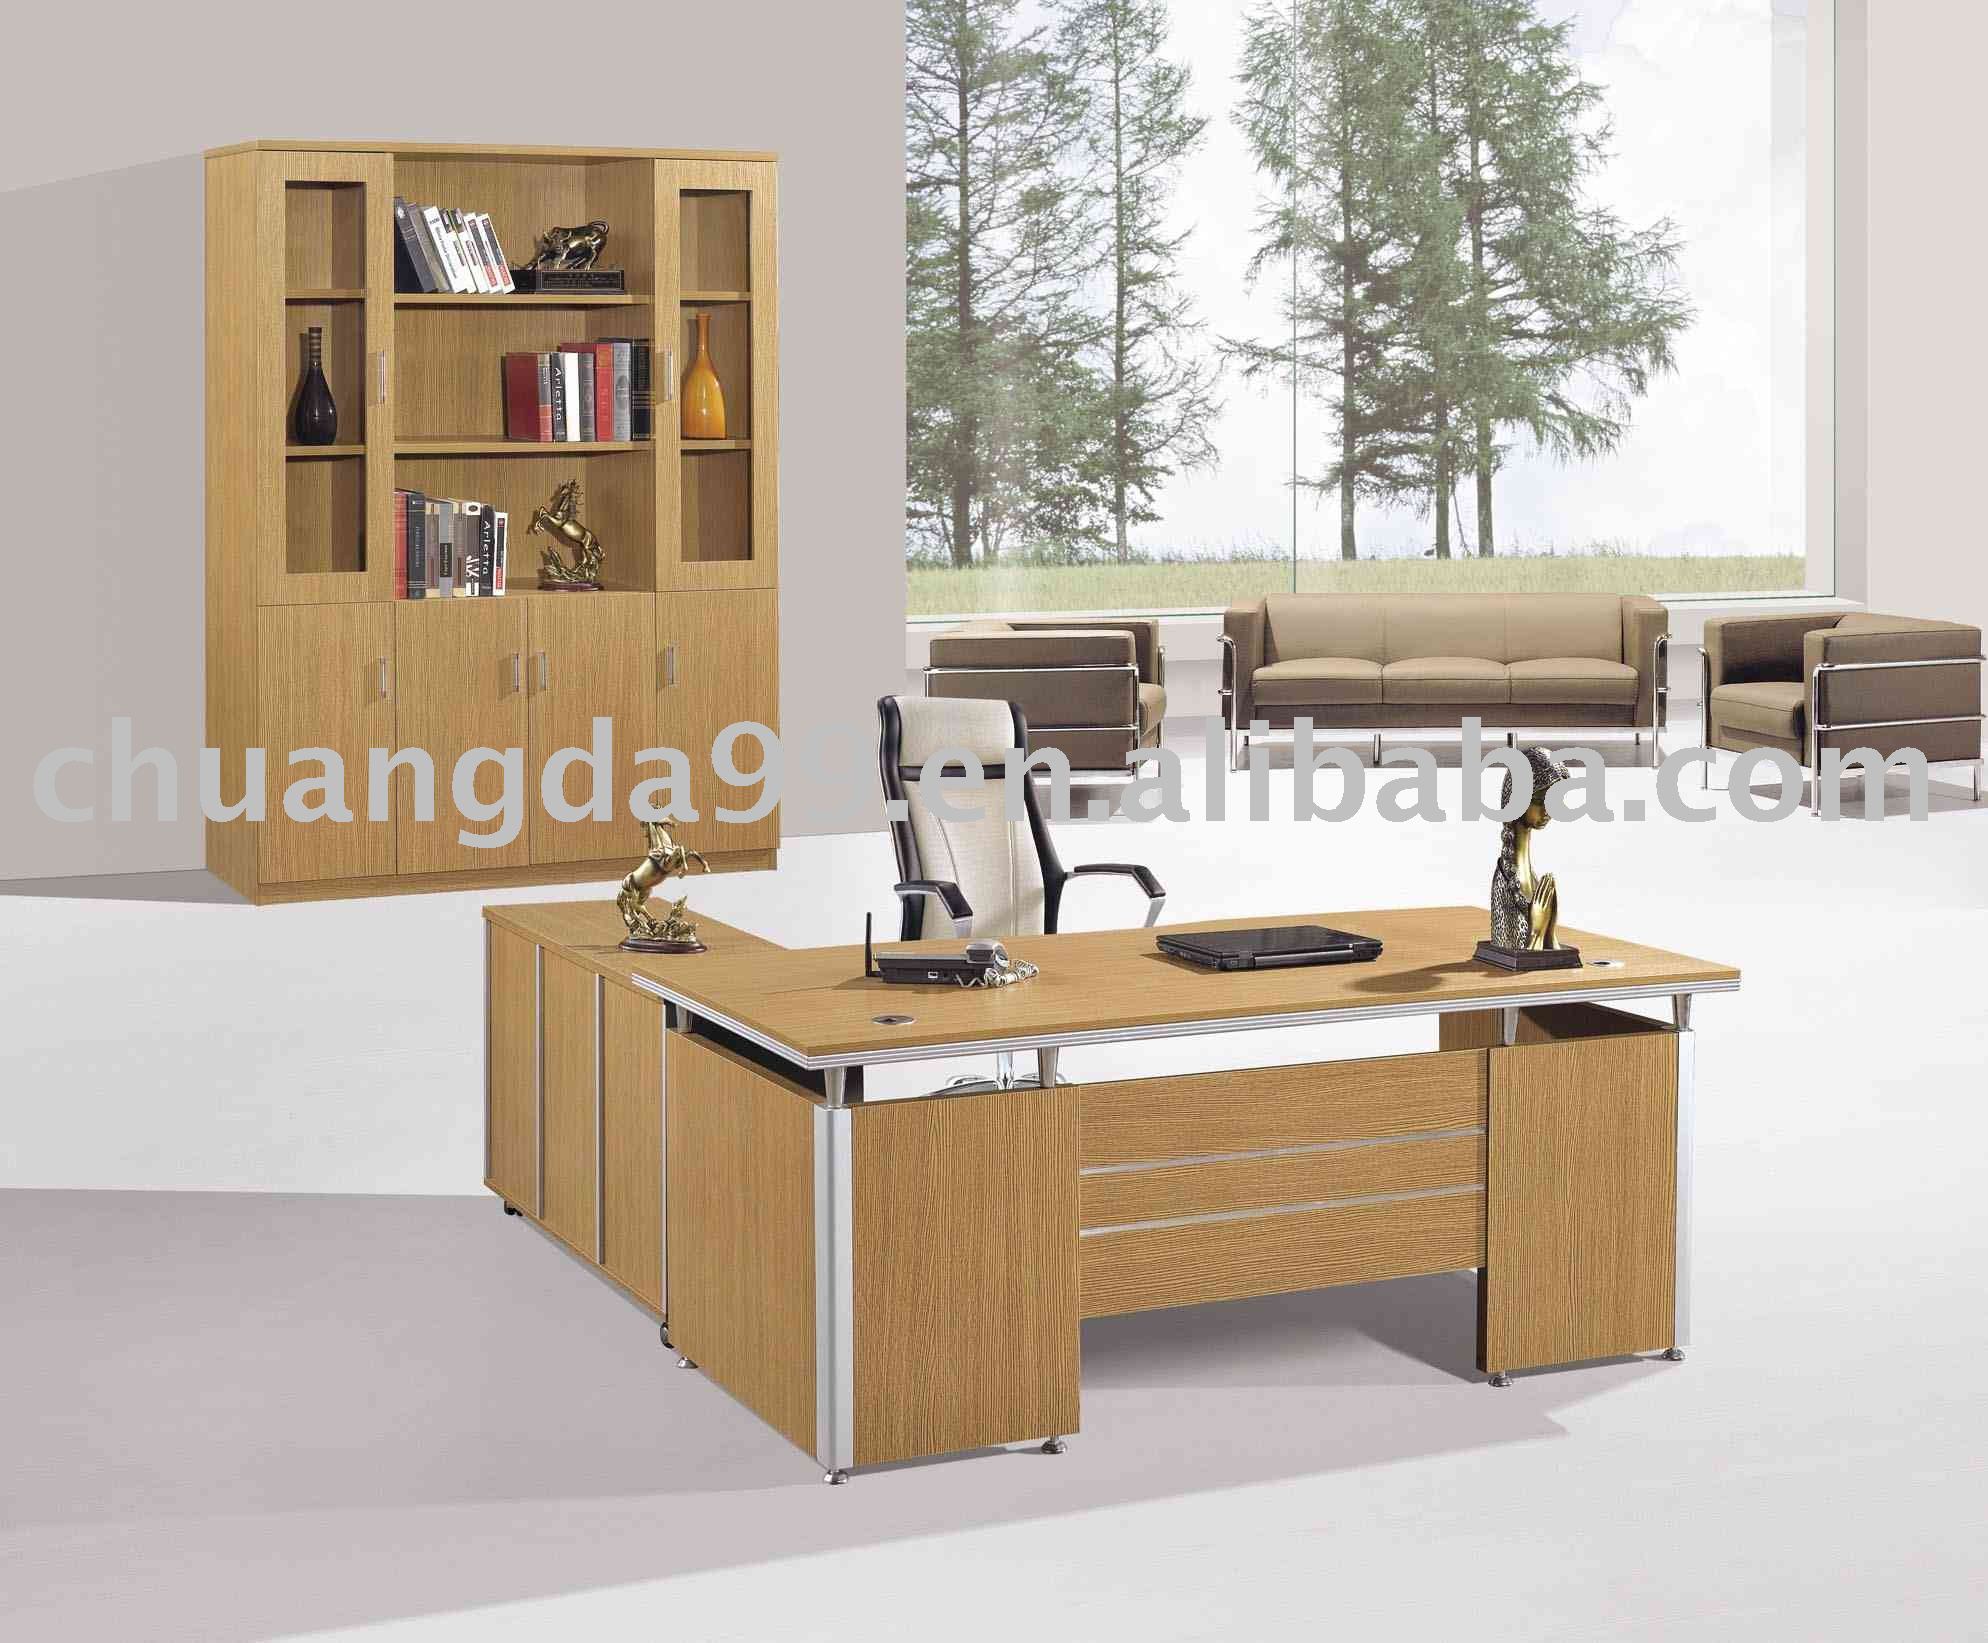 http://i00.i.aliimg.com/photo/v0/297104192/stylish_office_table.jpg